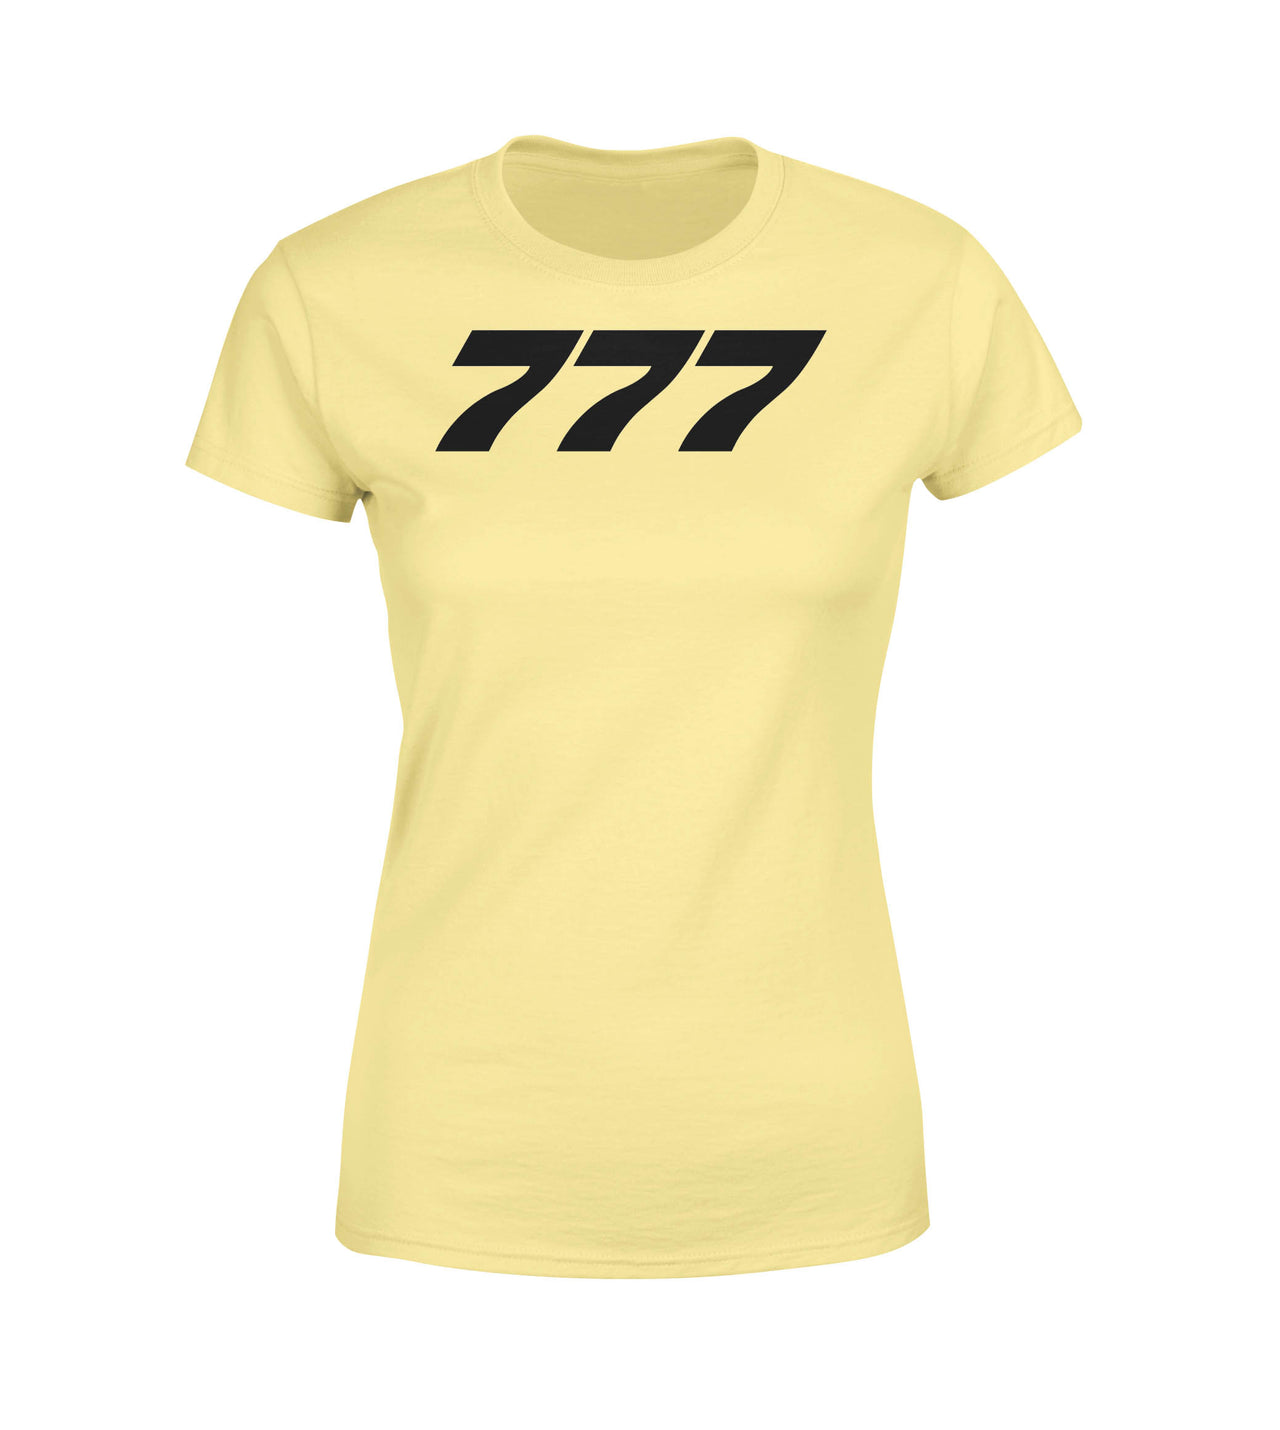 777 Flat Text Designed Women T-Shirts